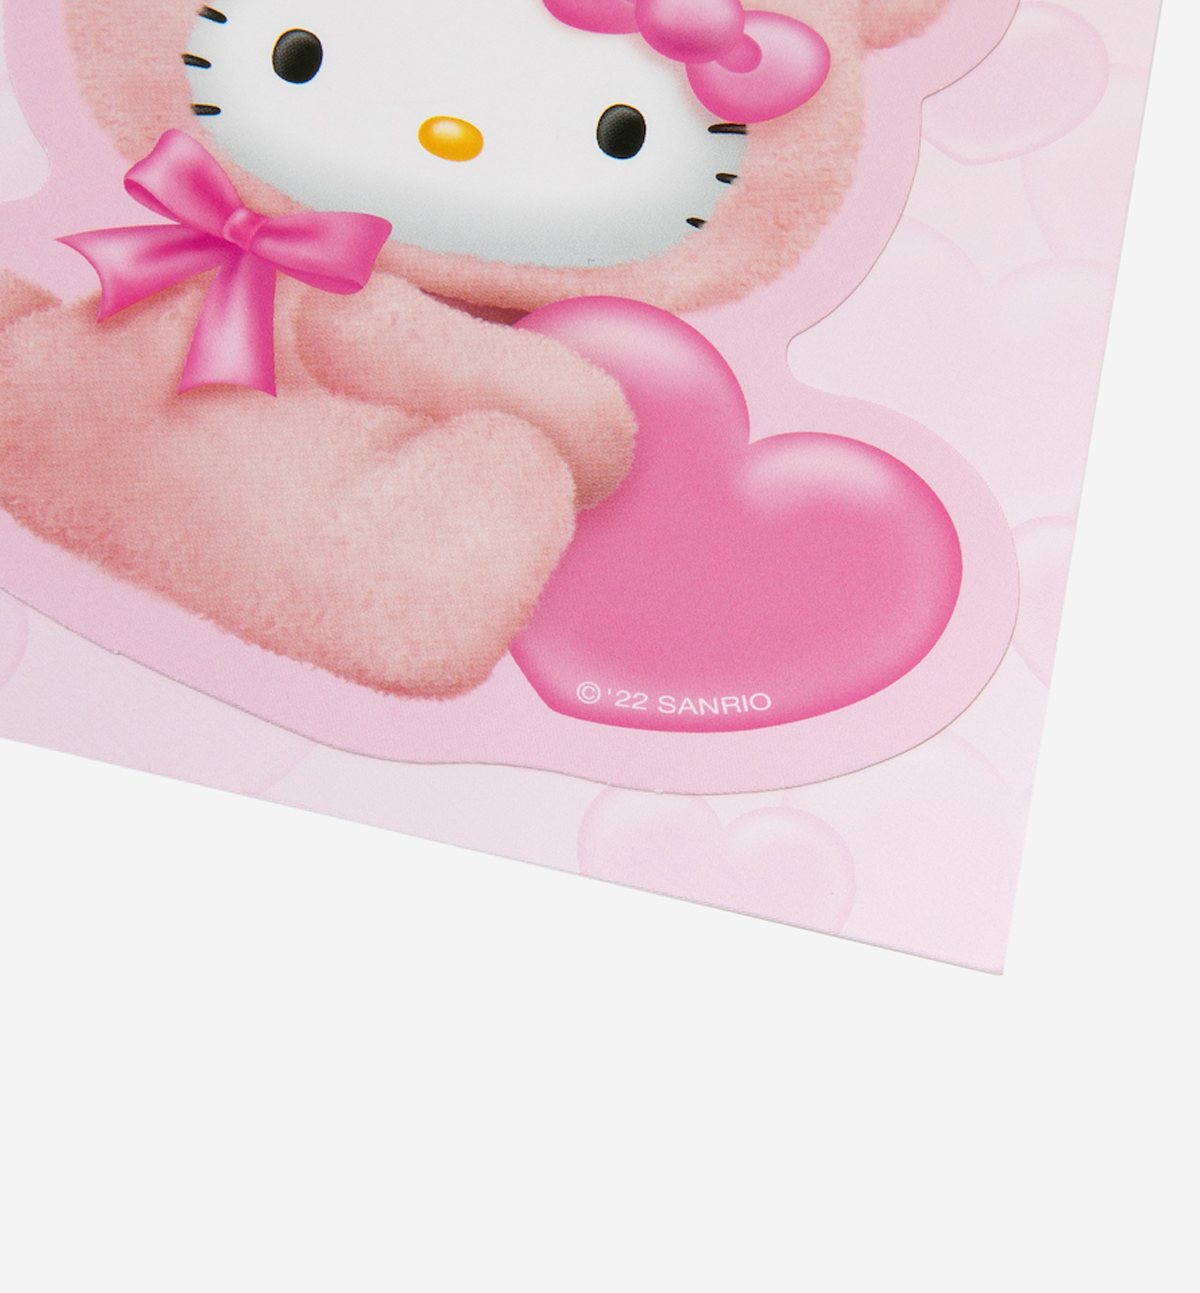 hello kitty valentine wallpaper